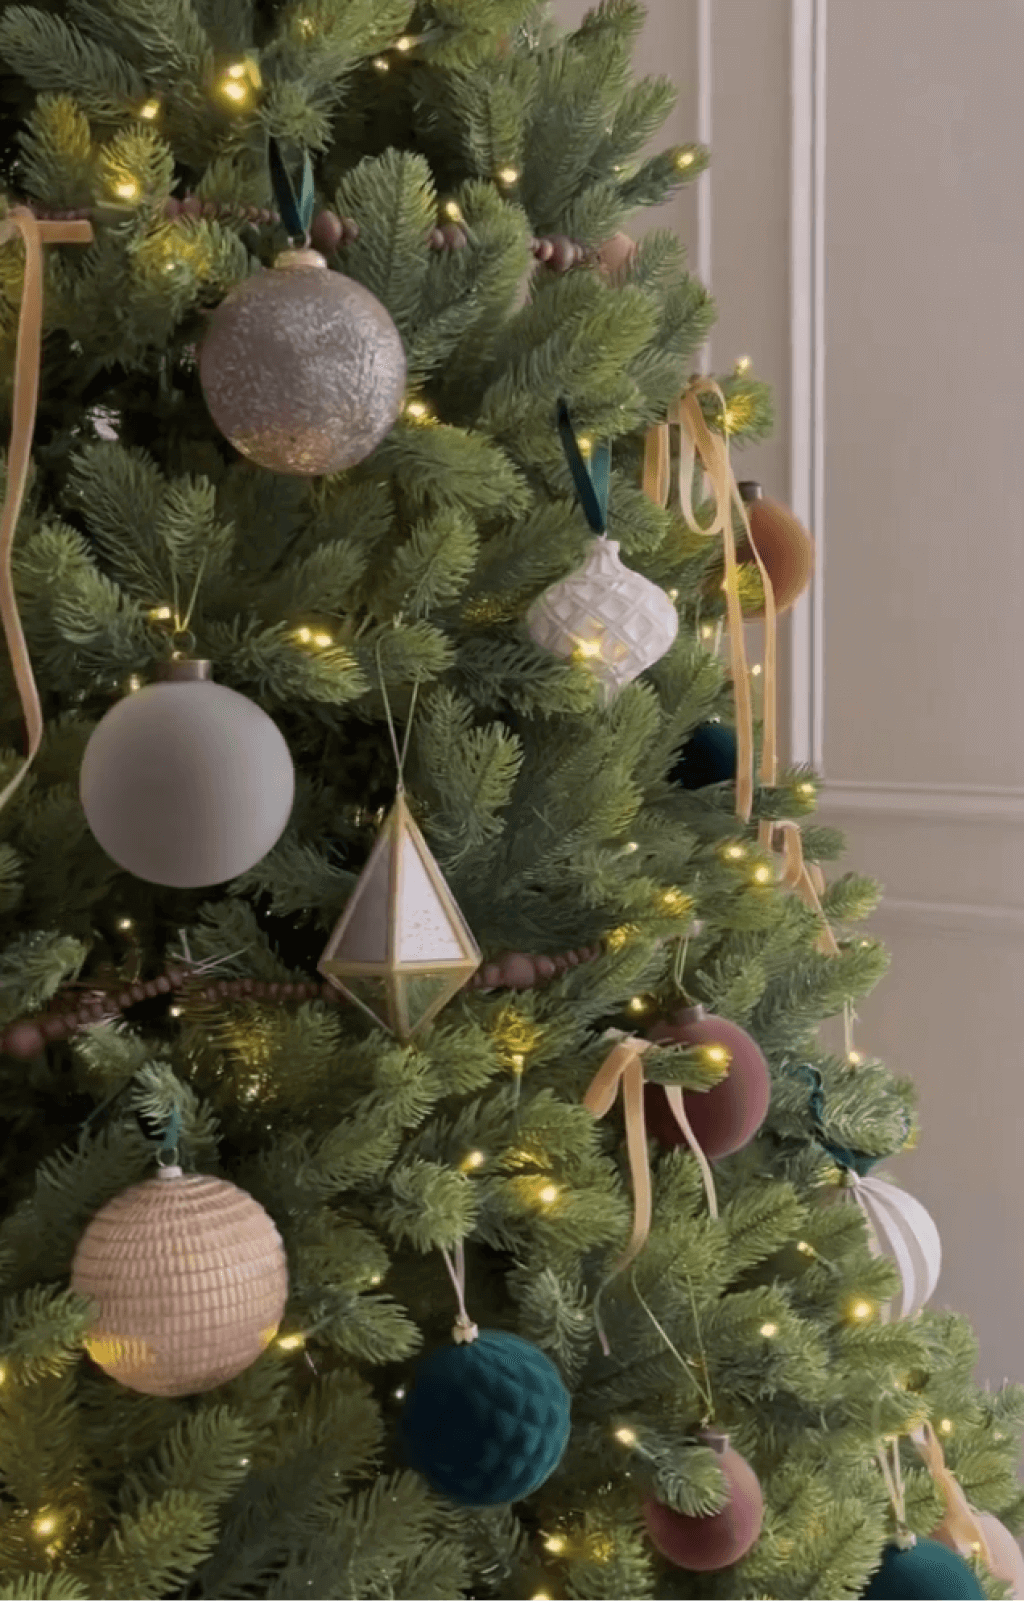 King of Christmas 12' Royal Fir Slim Quick-Shape Artificial Christmas Tree with 1500 Warm White & Multi-Color LED Lights